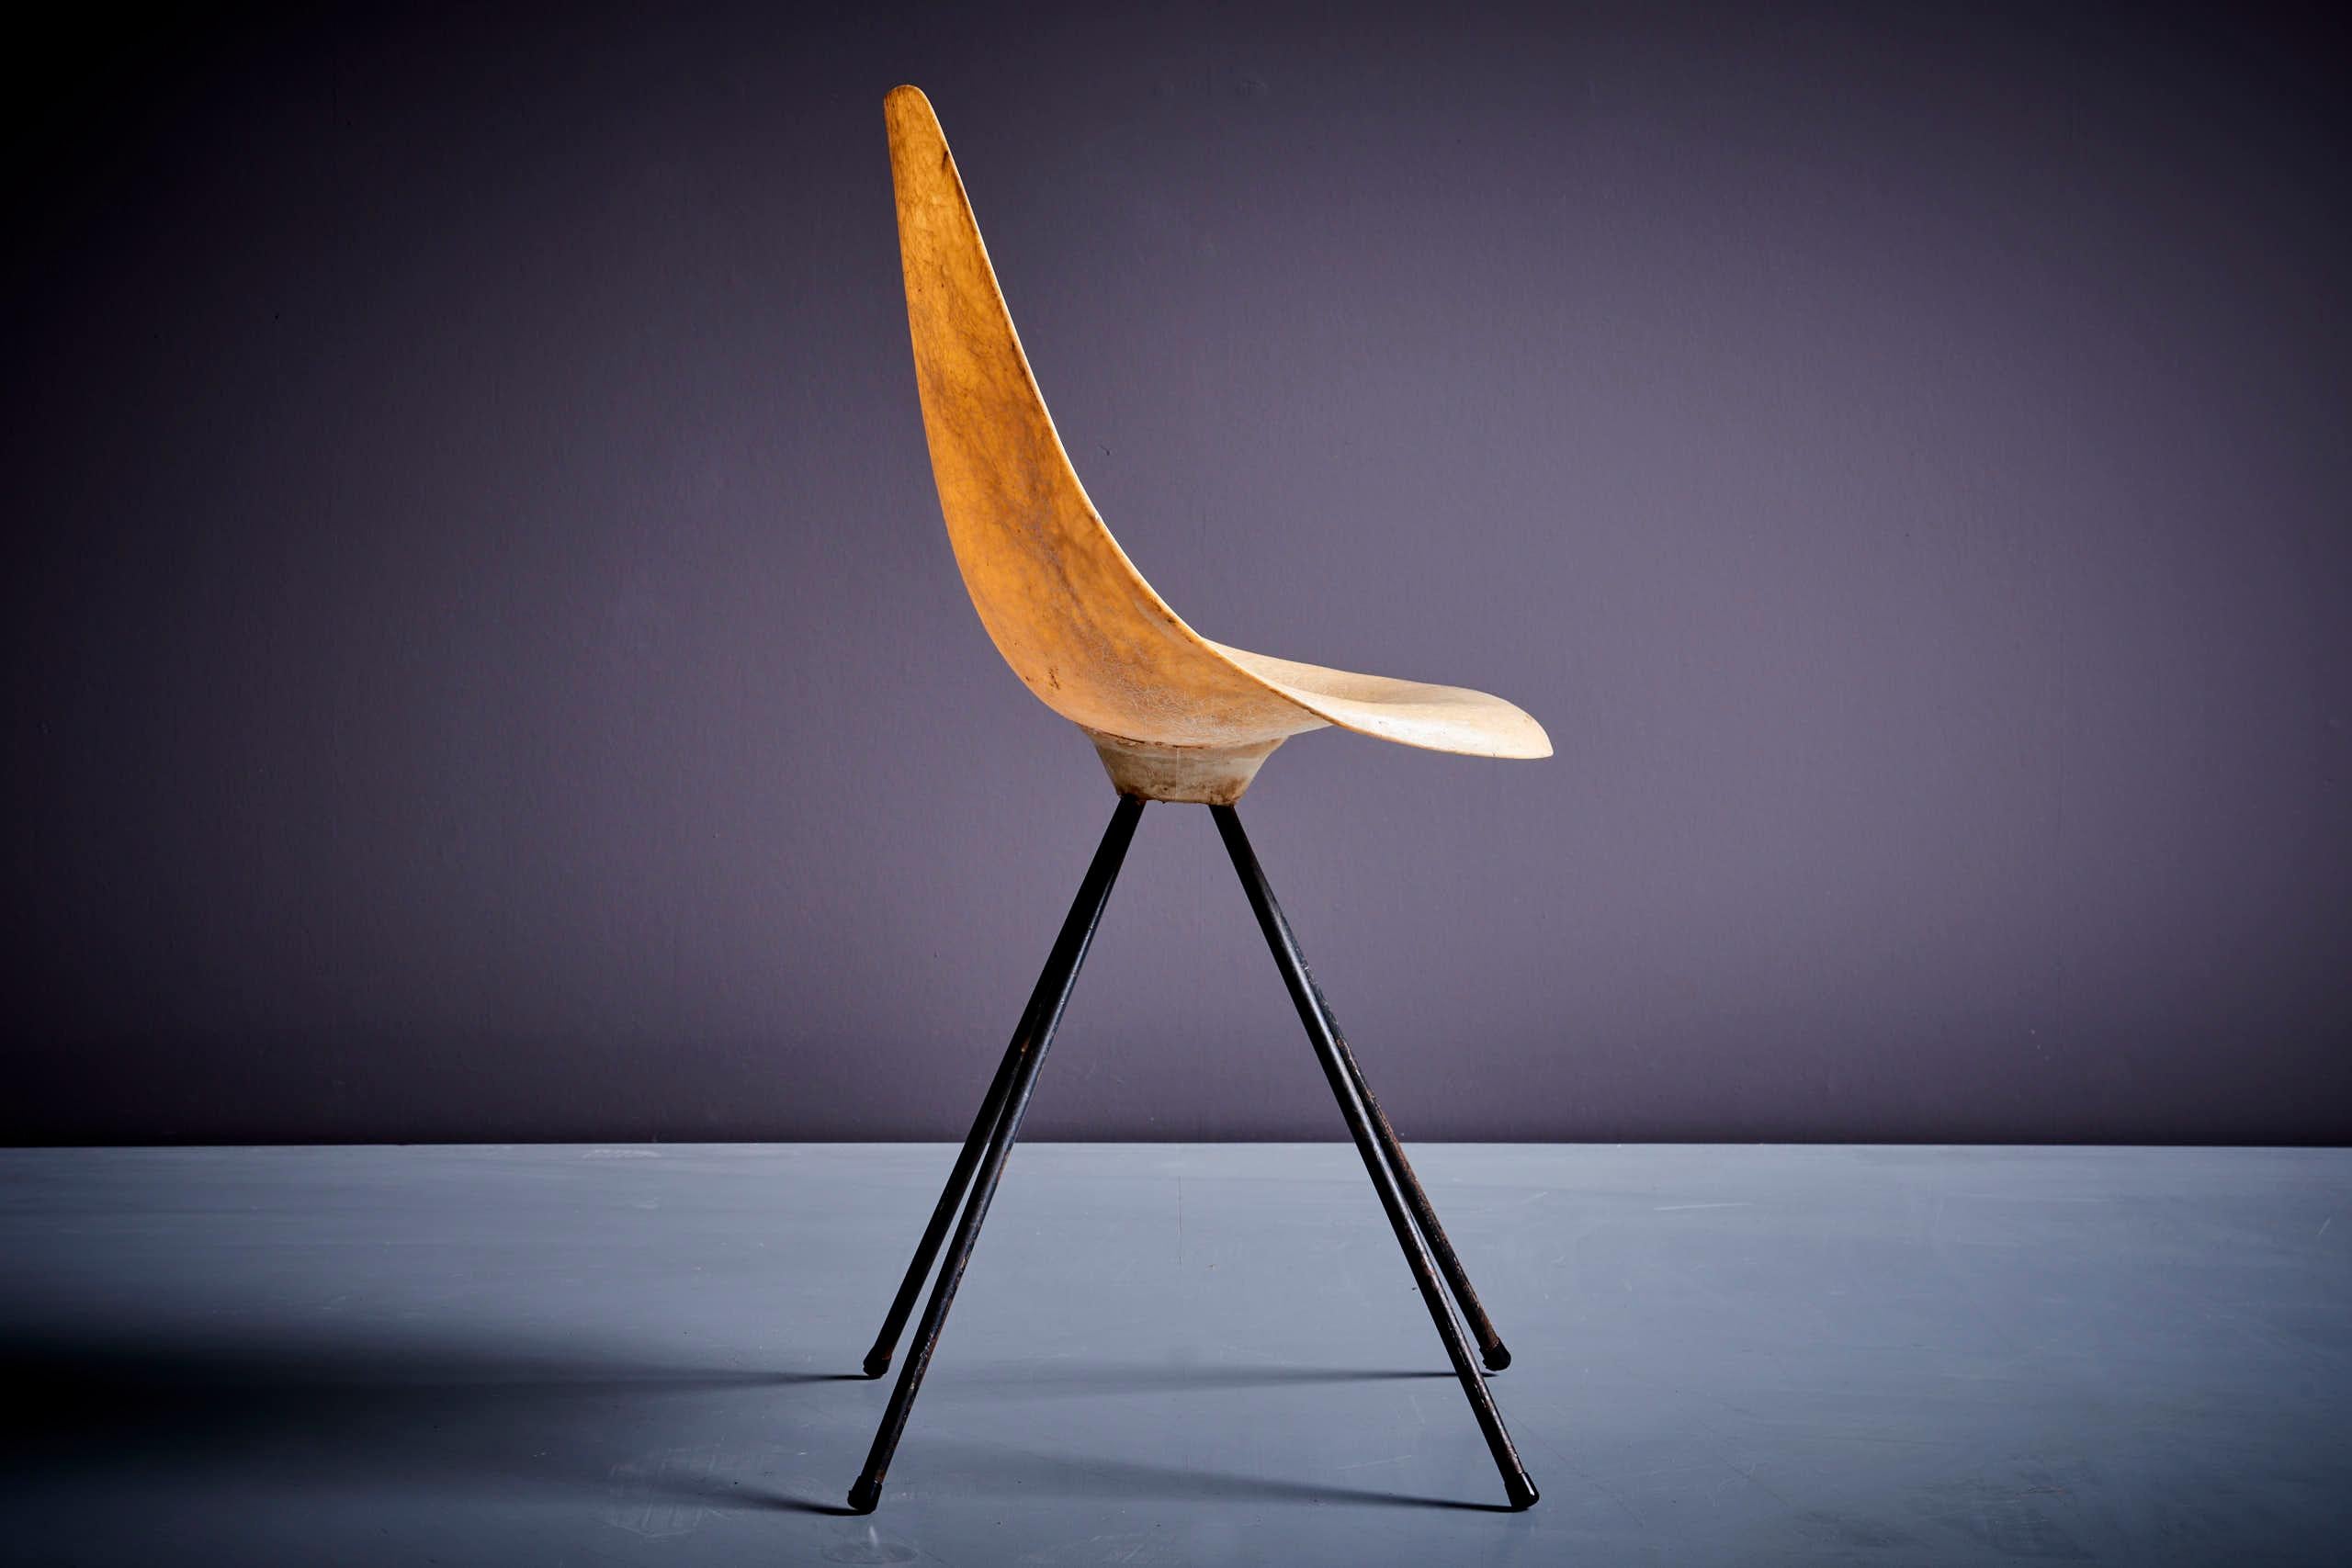 Jean-René Picard for S.E.T.A Fiberglass Chair France - 1950s In Good Condition For Sale In Berlin, DE